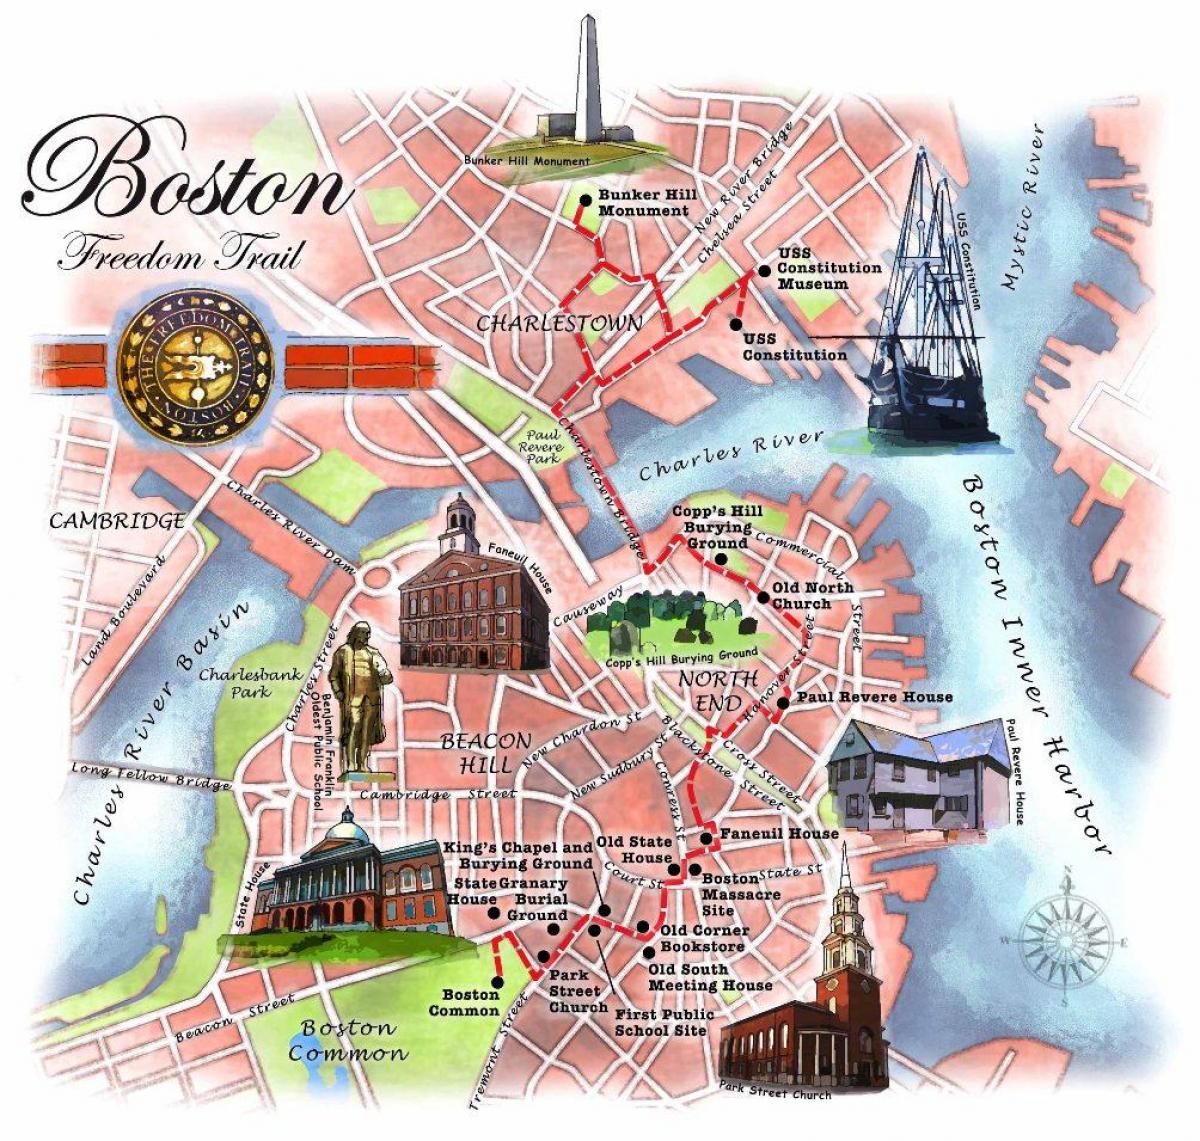 kort over Boston freedom trail